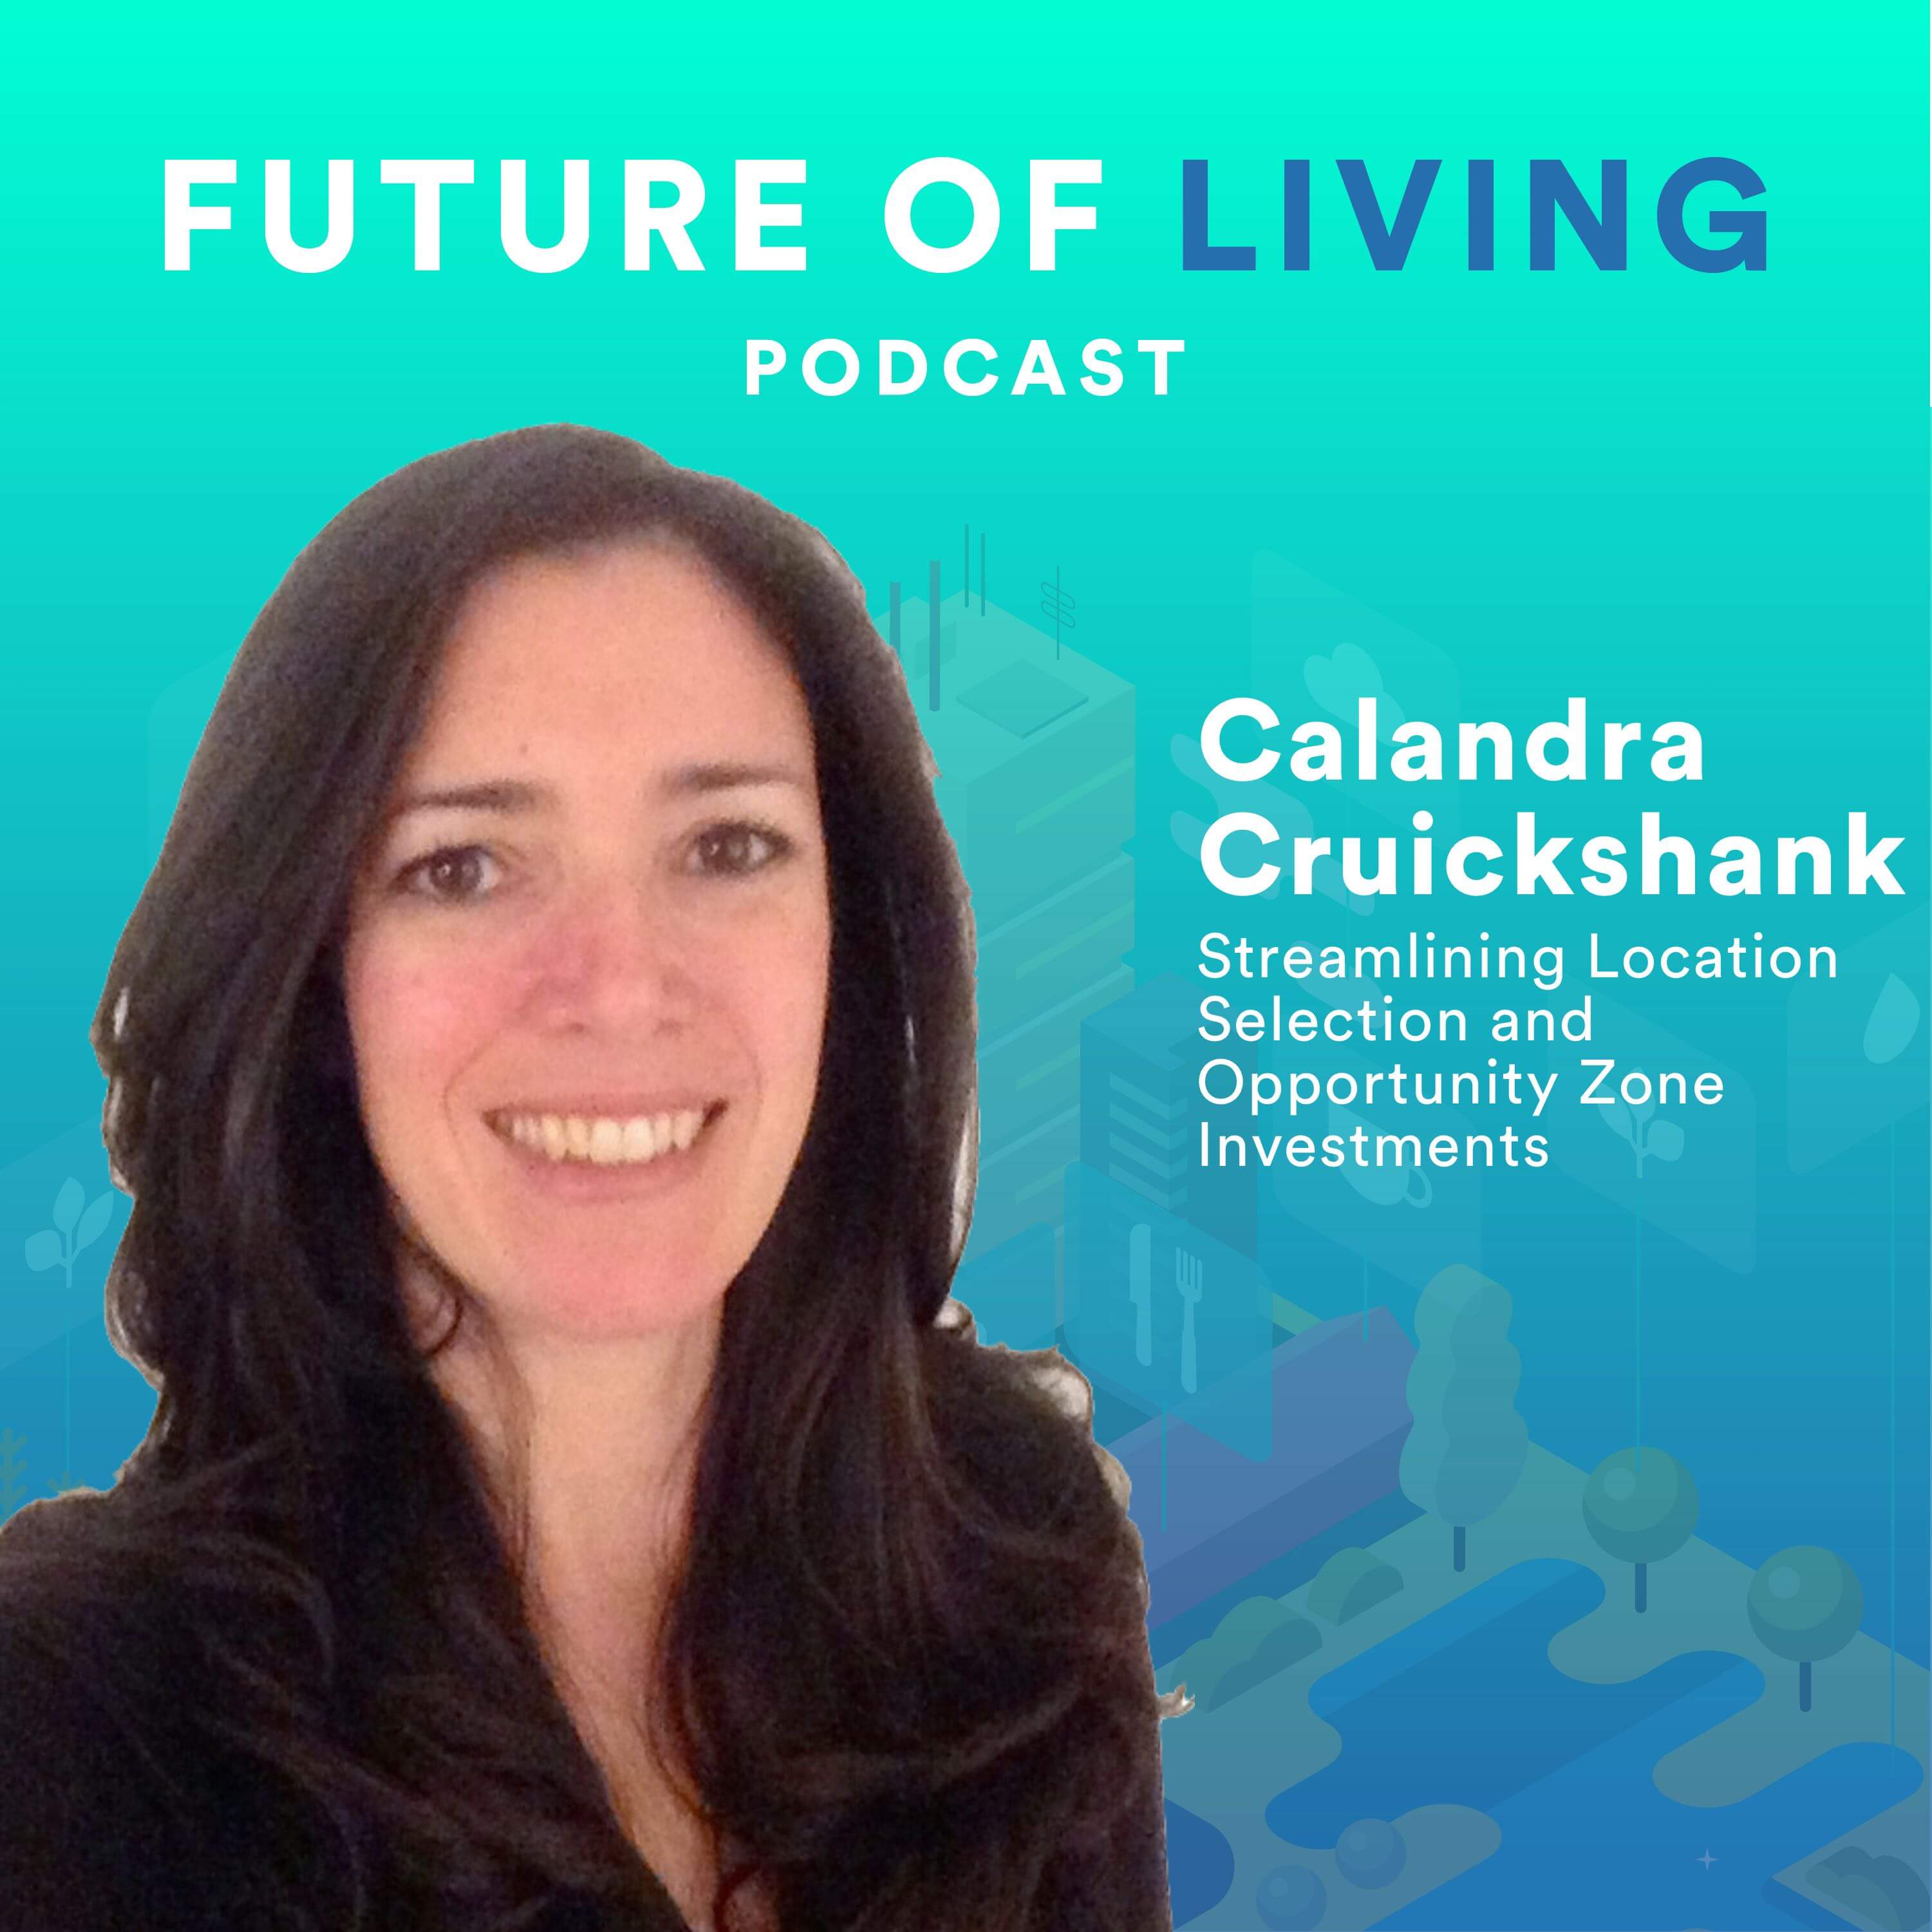 Calandra Cruickshank on the Future of Living Podcast with Blake Miller